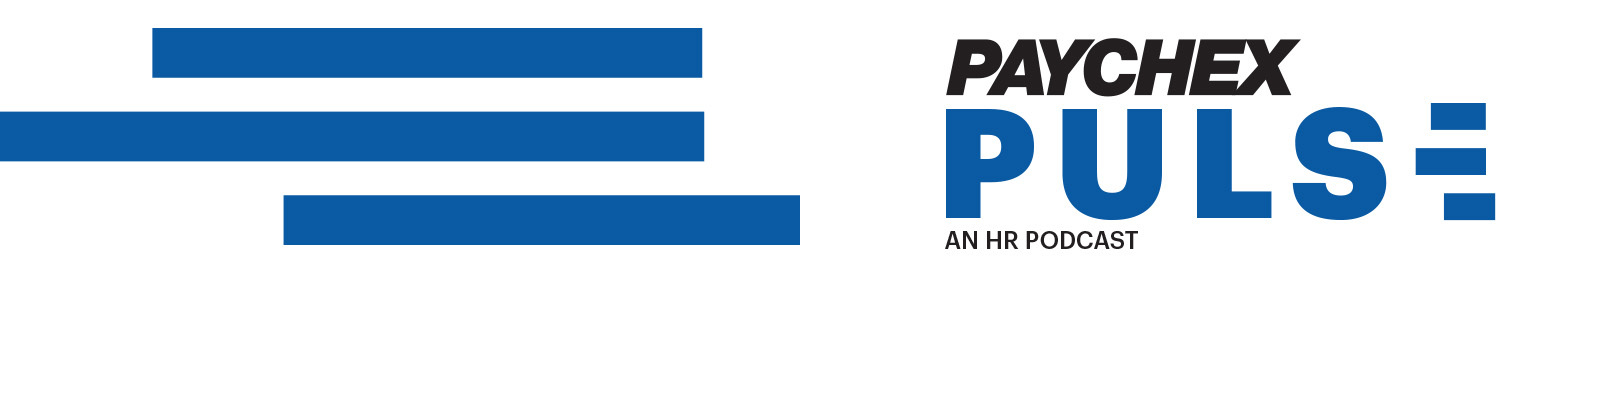 Paychex PULSE, an HR Podcast